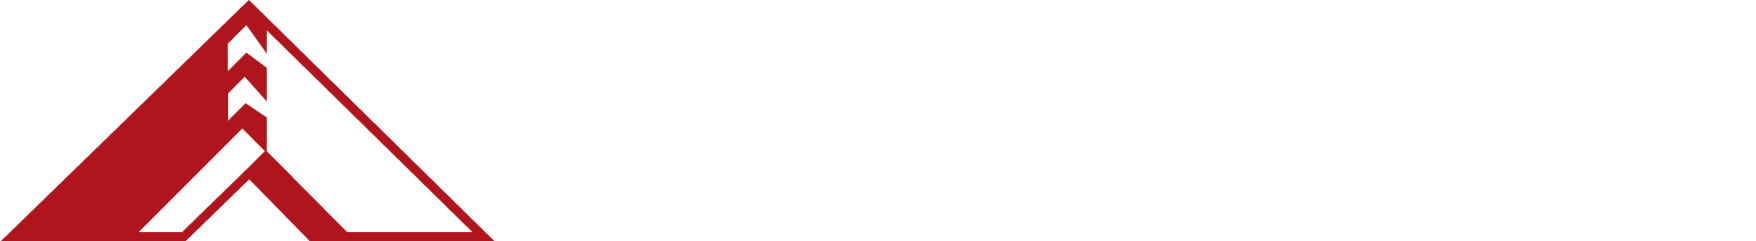 American Woodmark Corporation logo